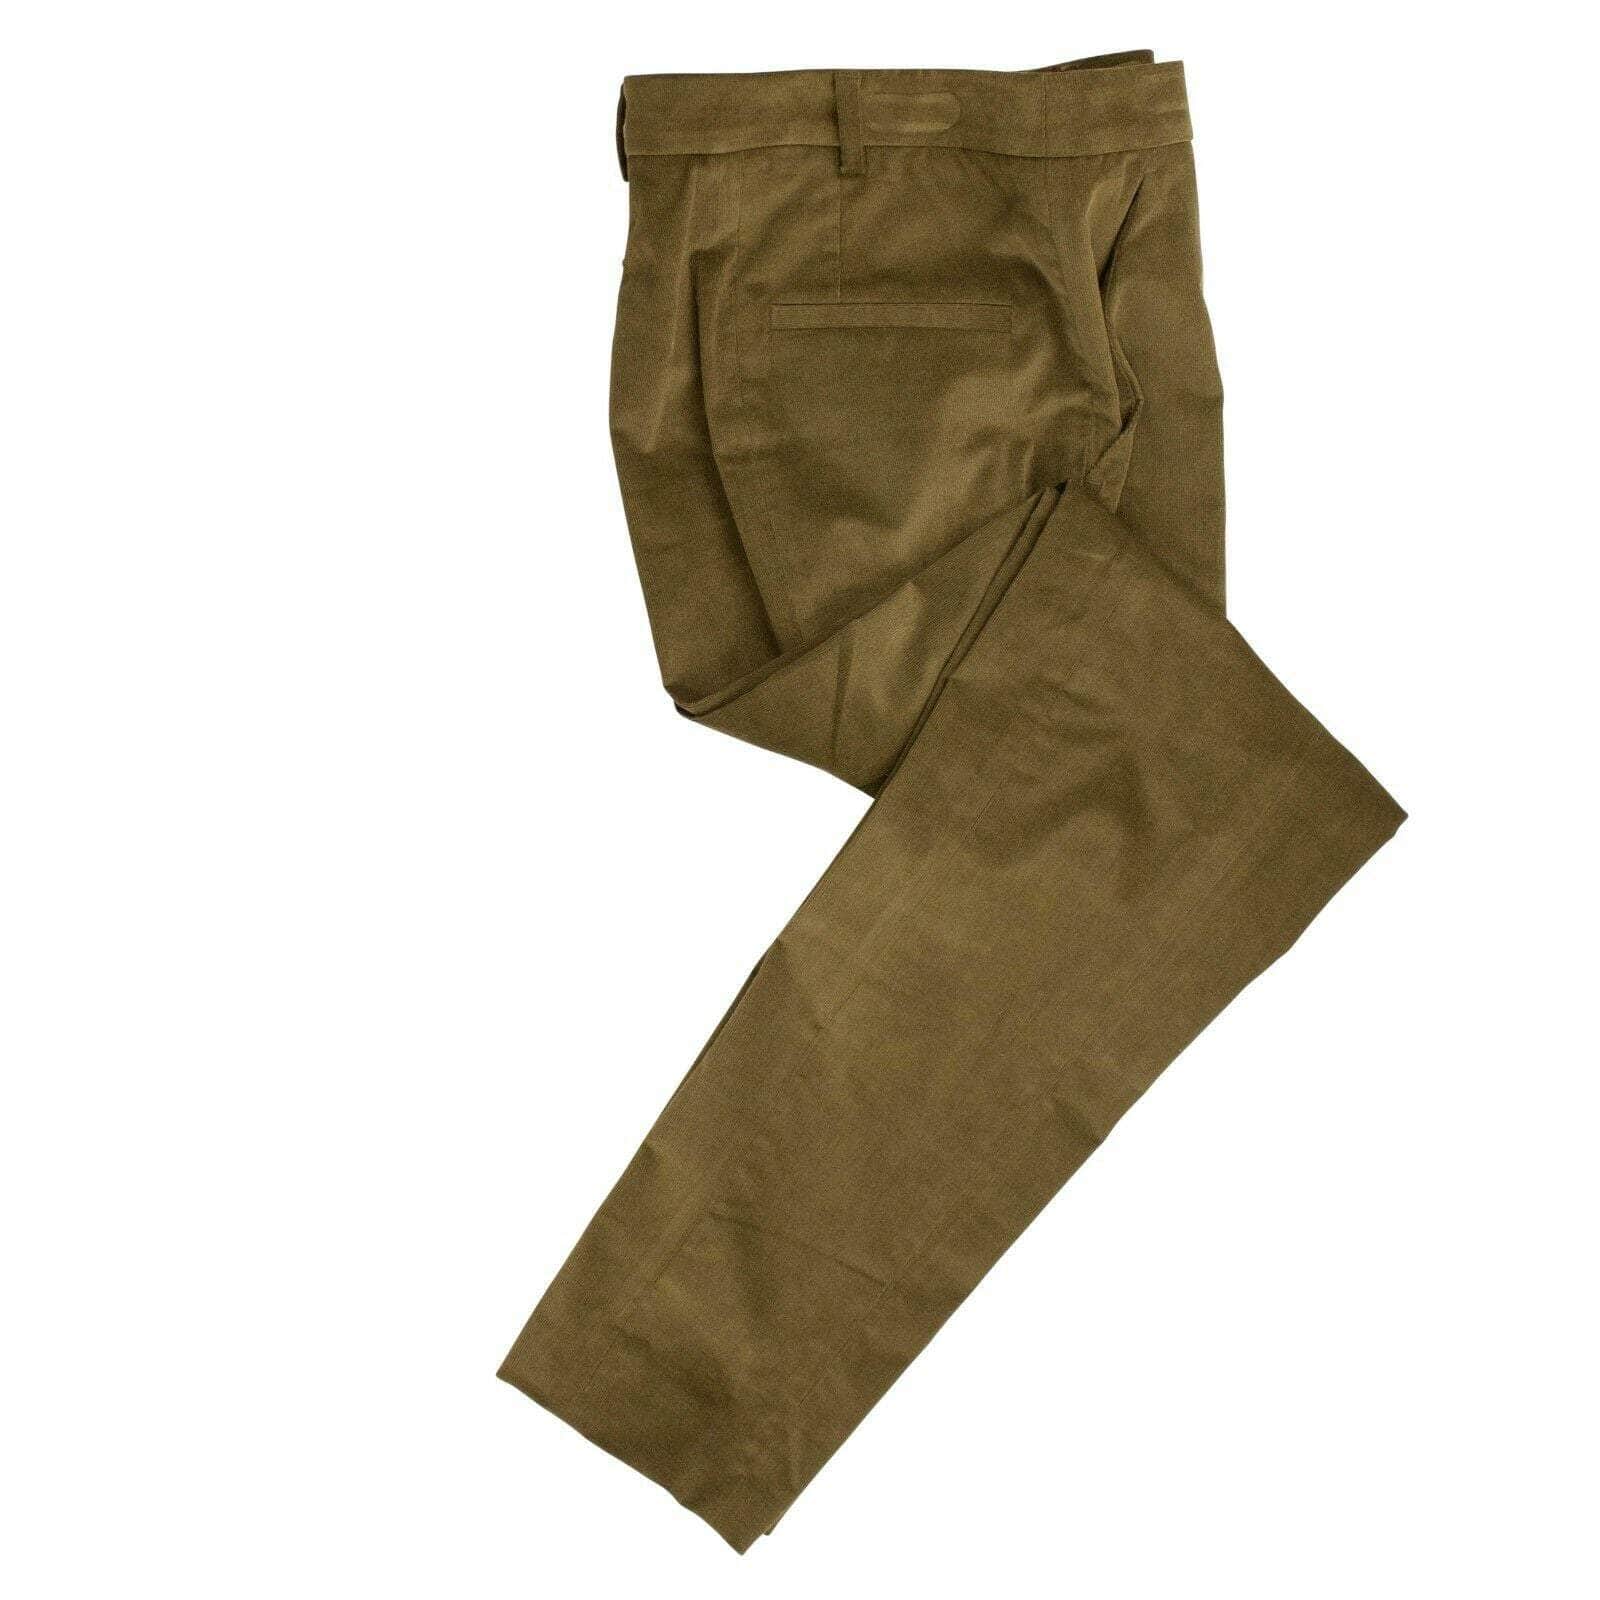 RED VALENTINO size-40, under-250 40 Olive Green Corduroy Tailored Pants 67V-510/40 67V-510/40